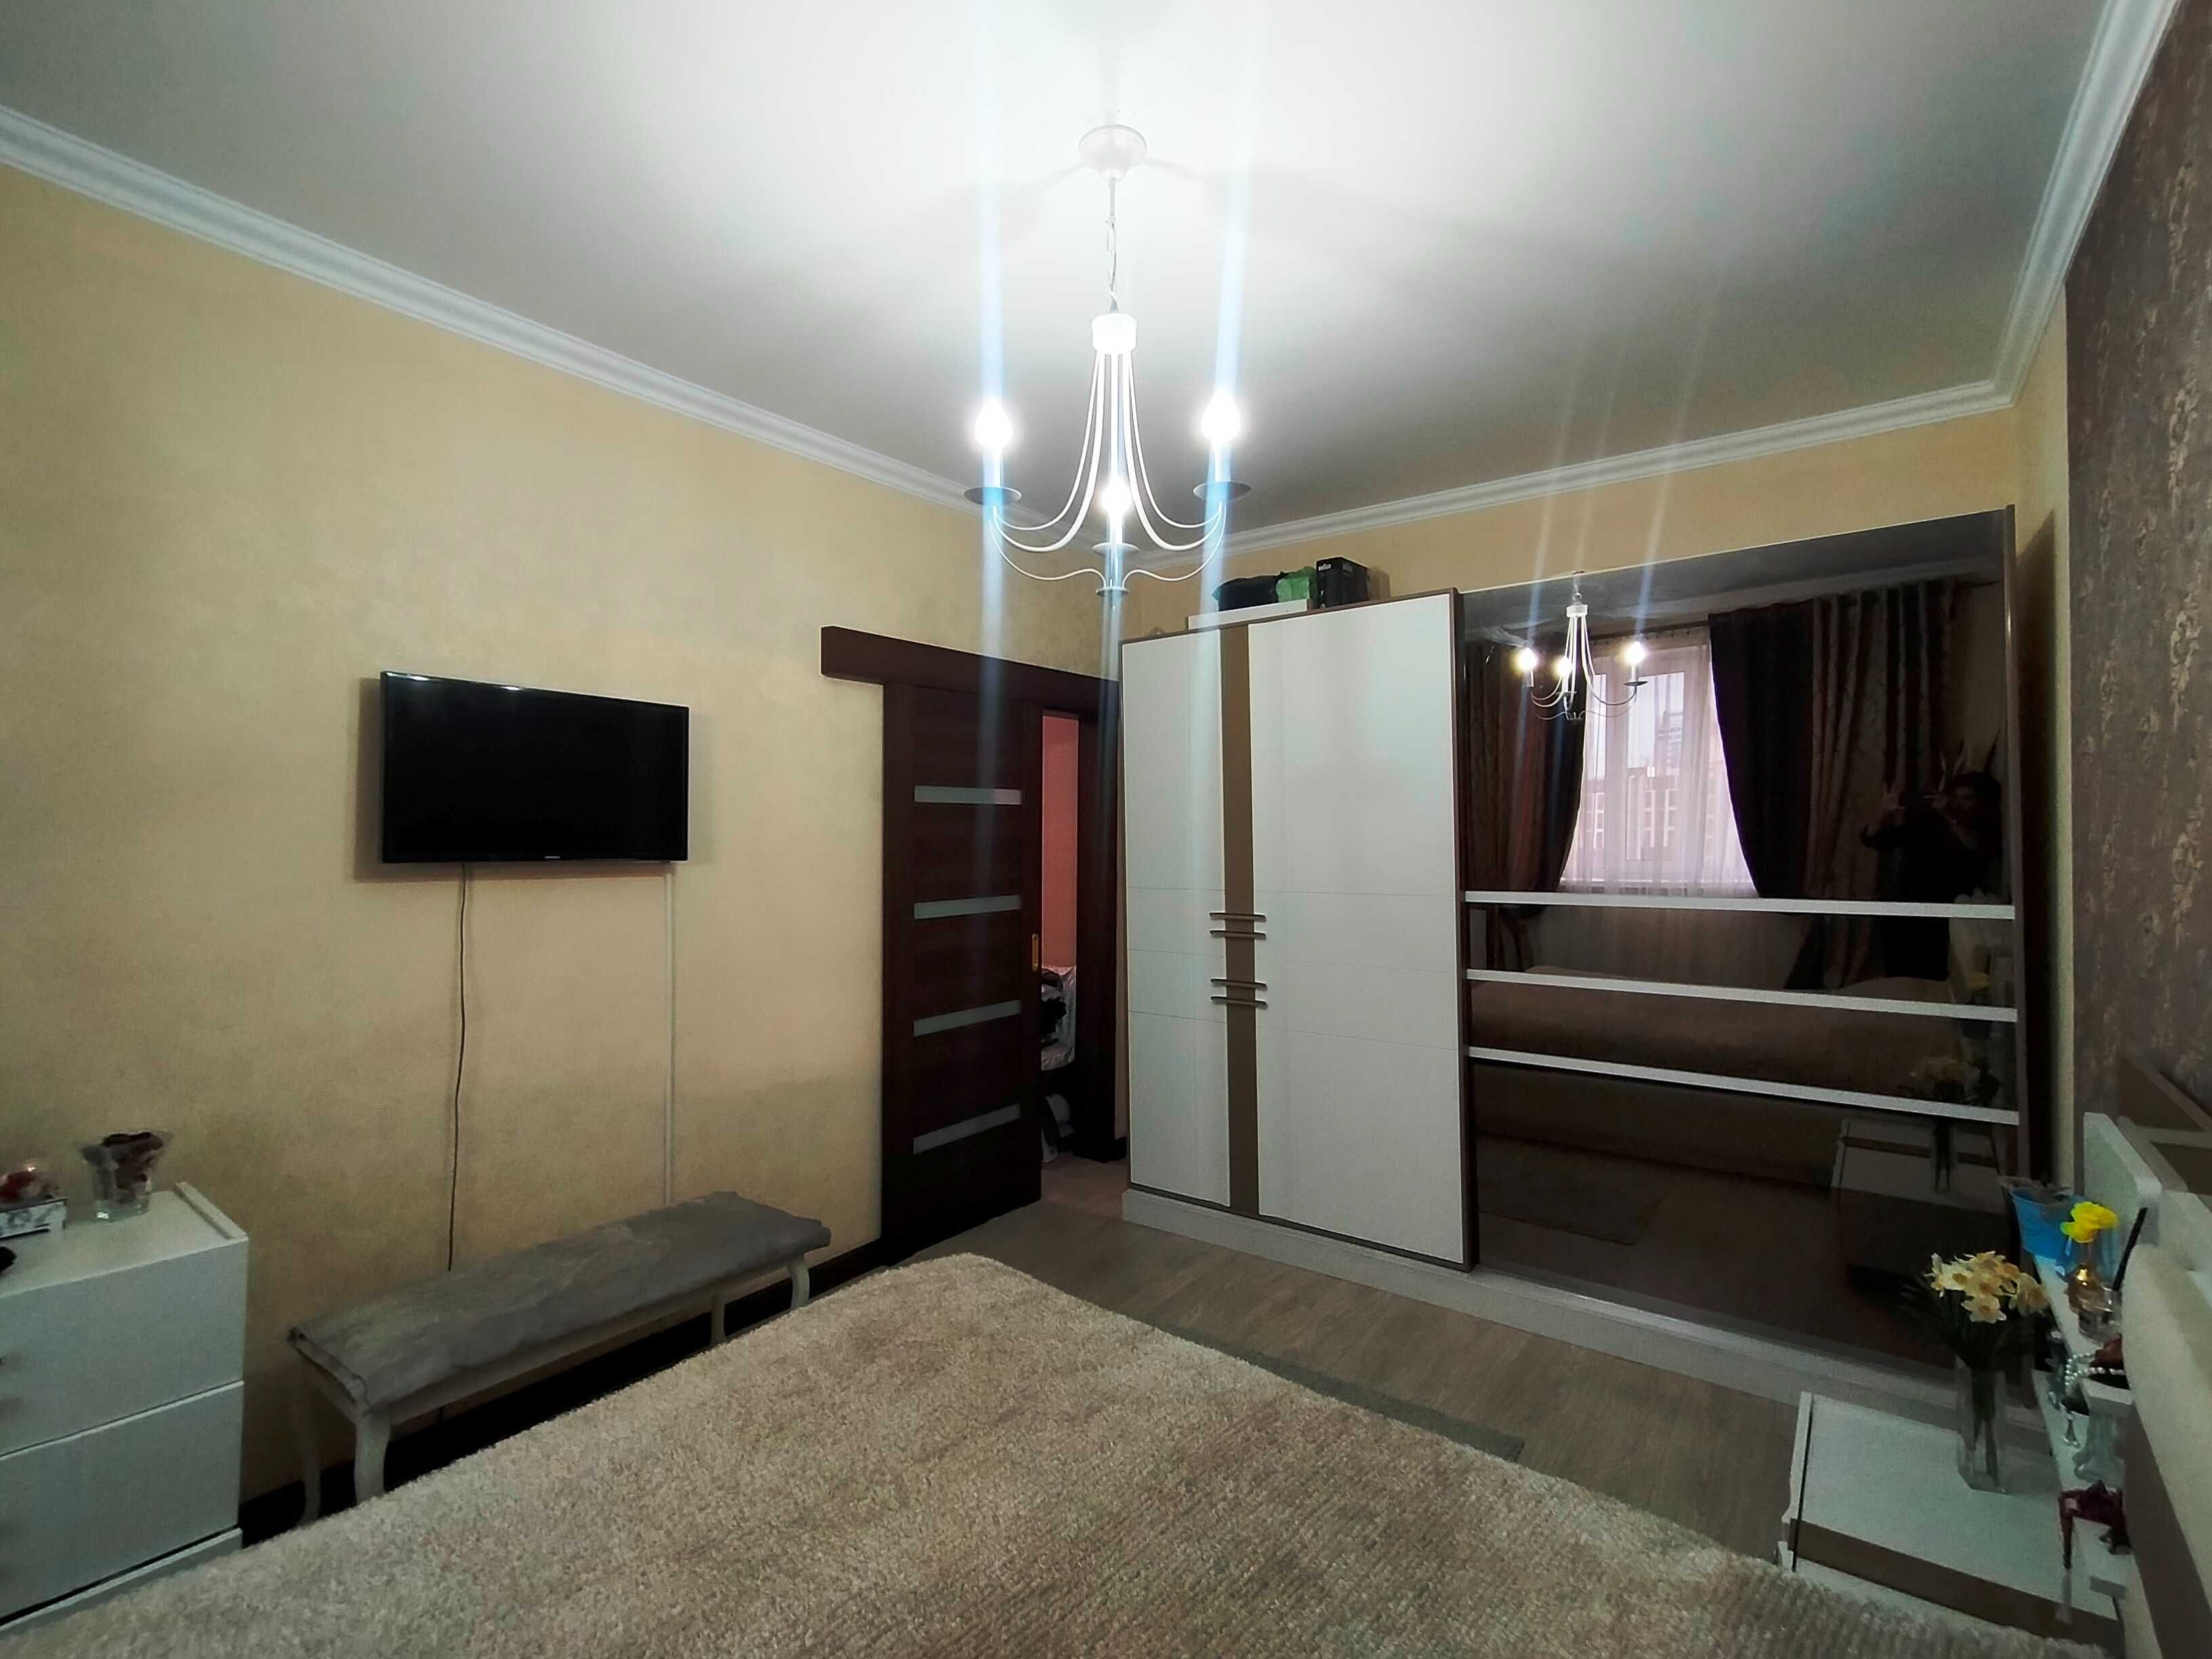 Продается улучшенная 2-комнатная квартира по Сары-арка Старая Корзина